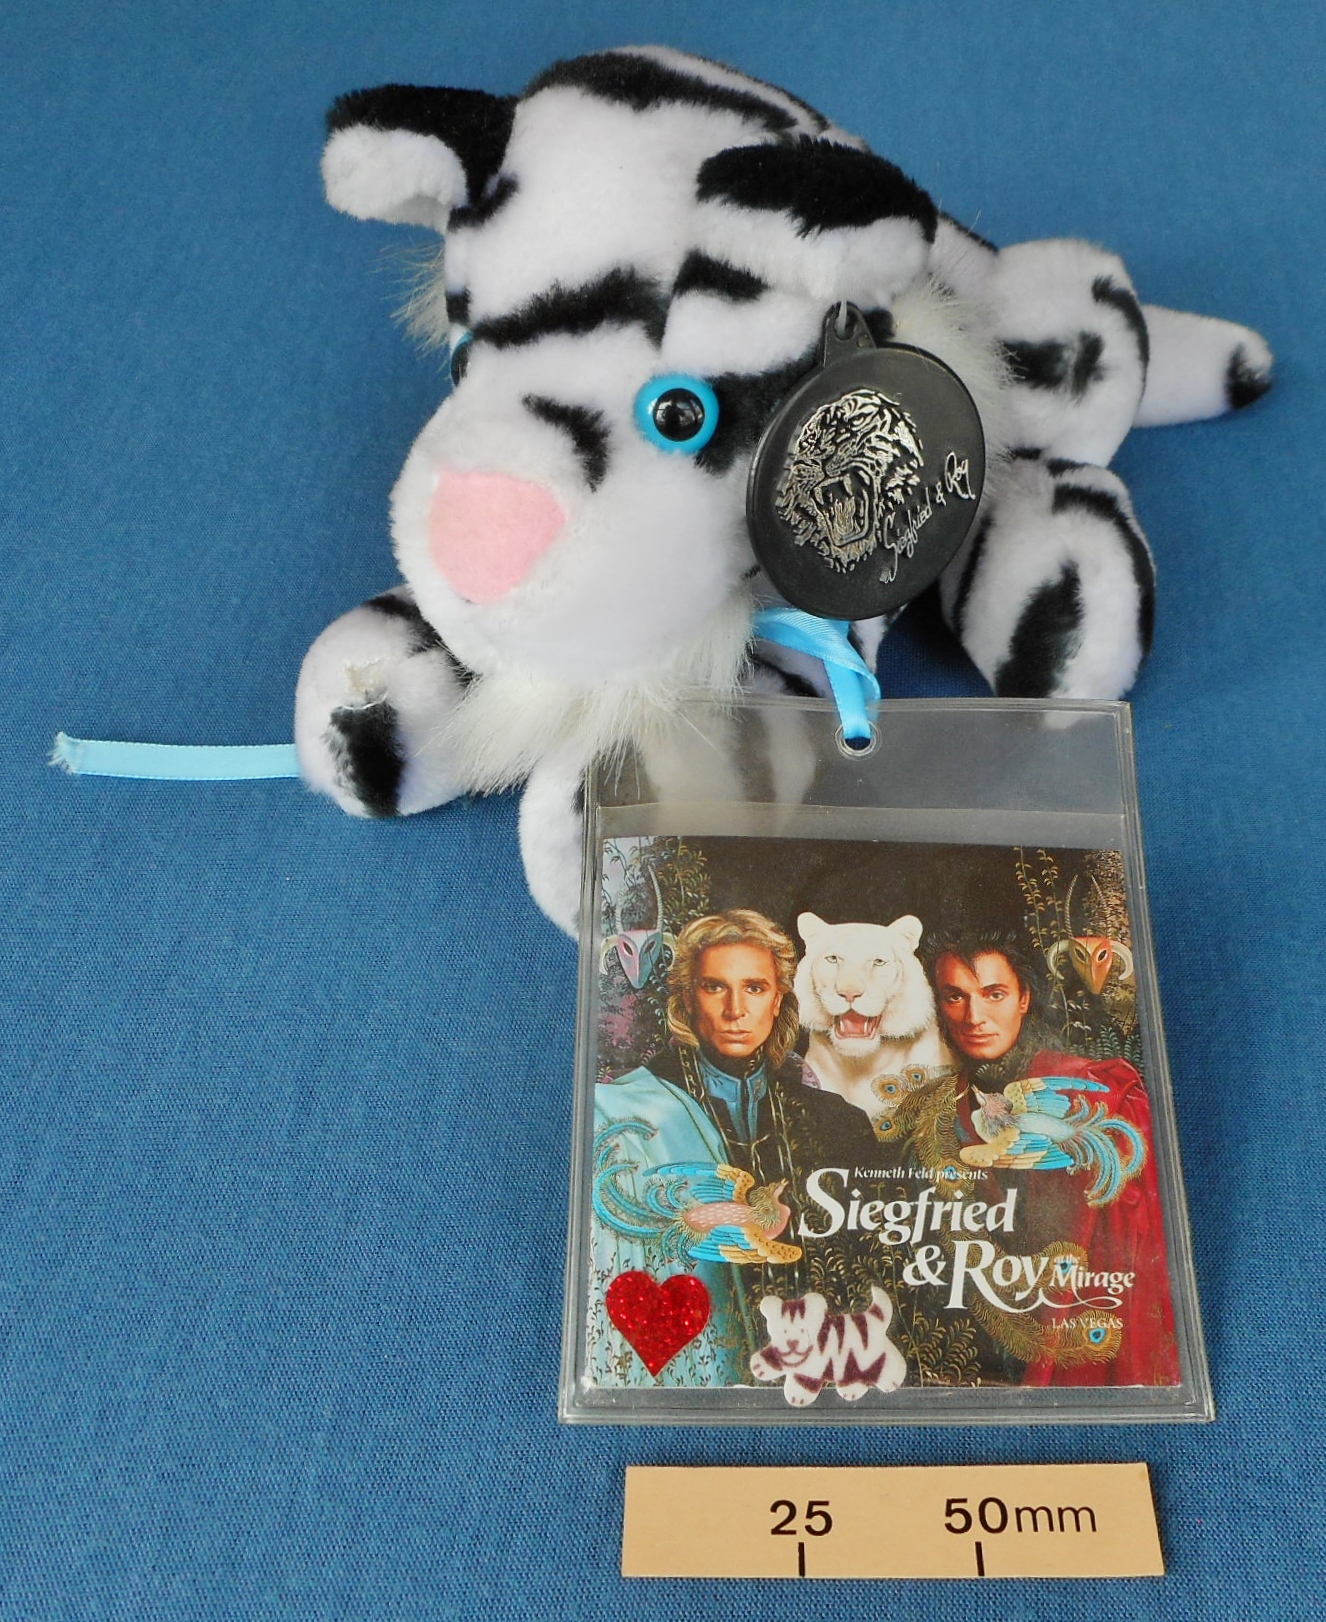 Siegfried and Roy souvenir white tiger